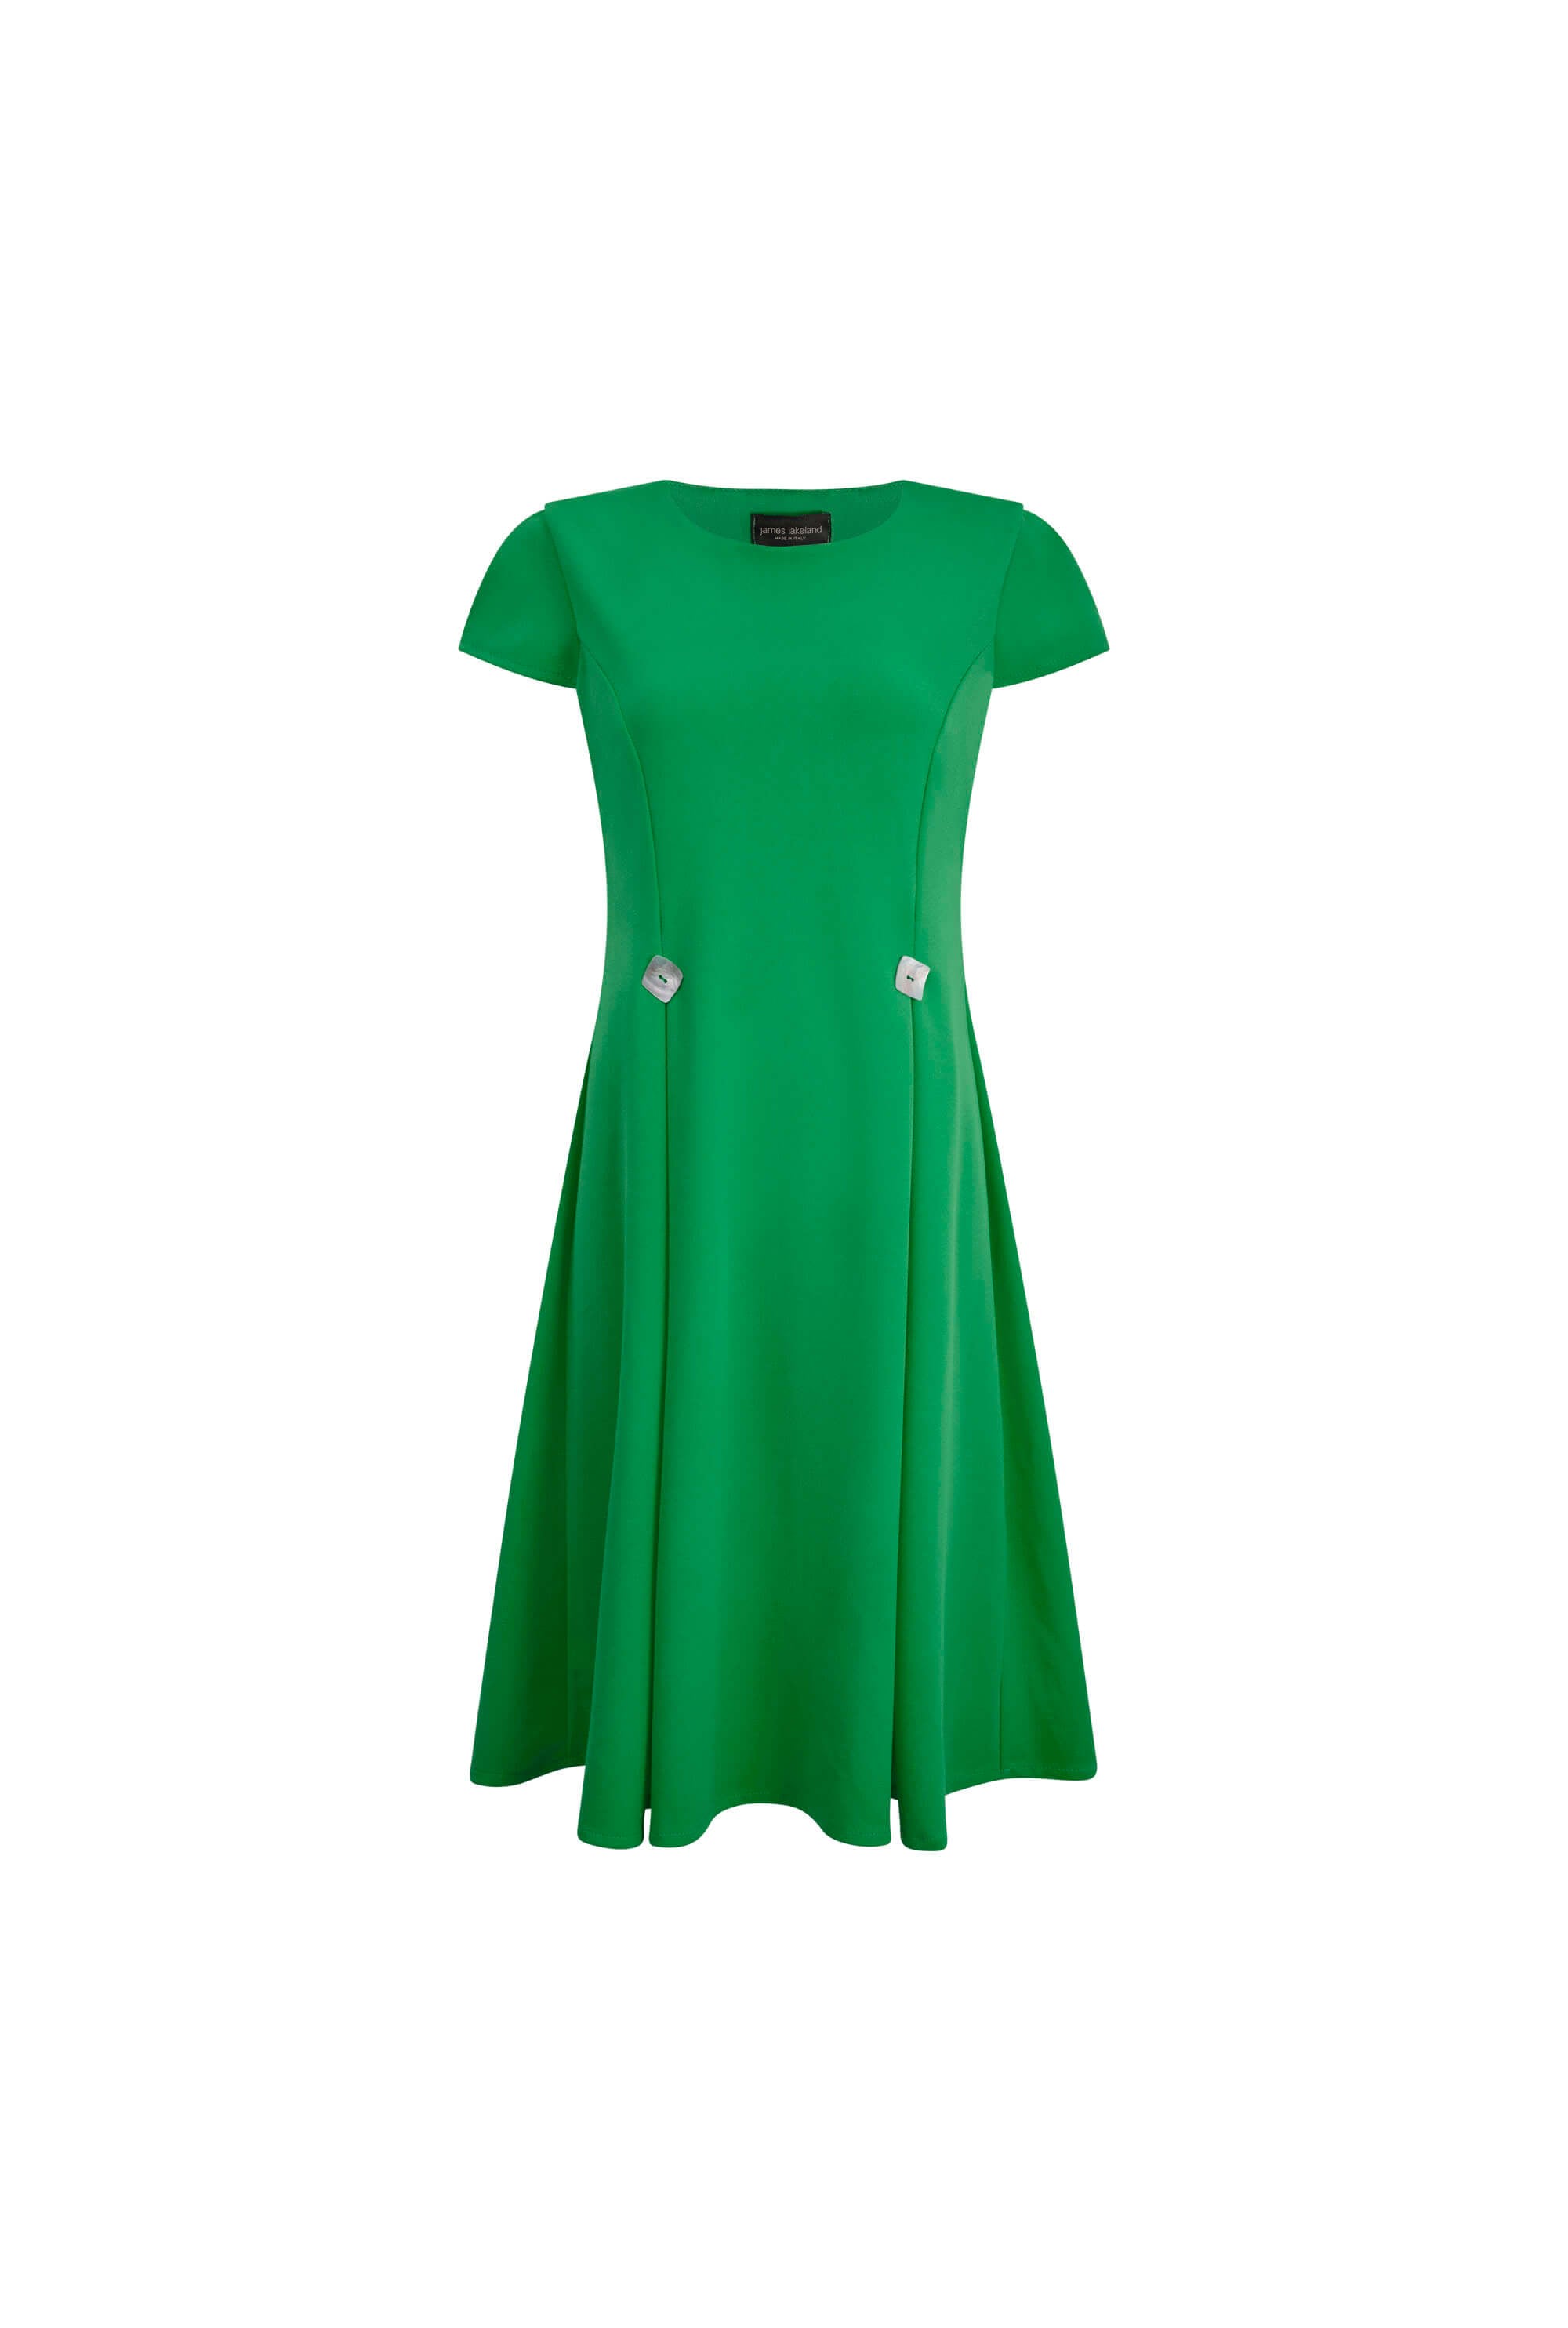 James Lakeland Women's Cap Sleeve Button Midi Dress Green In Multi